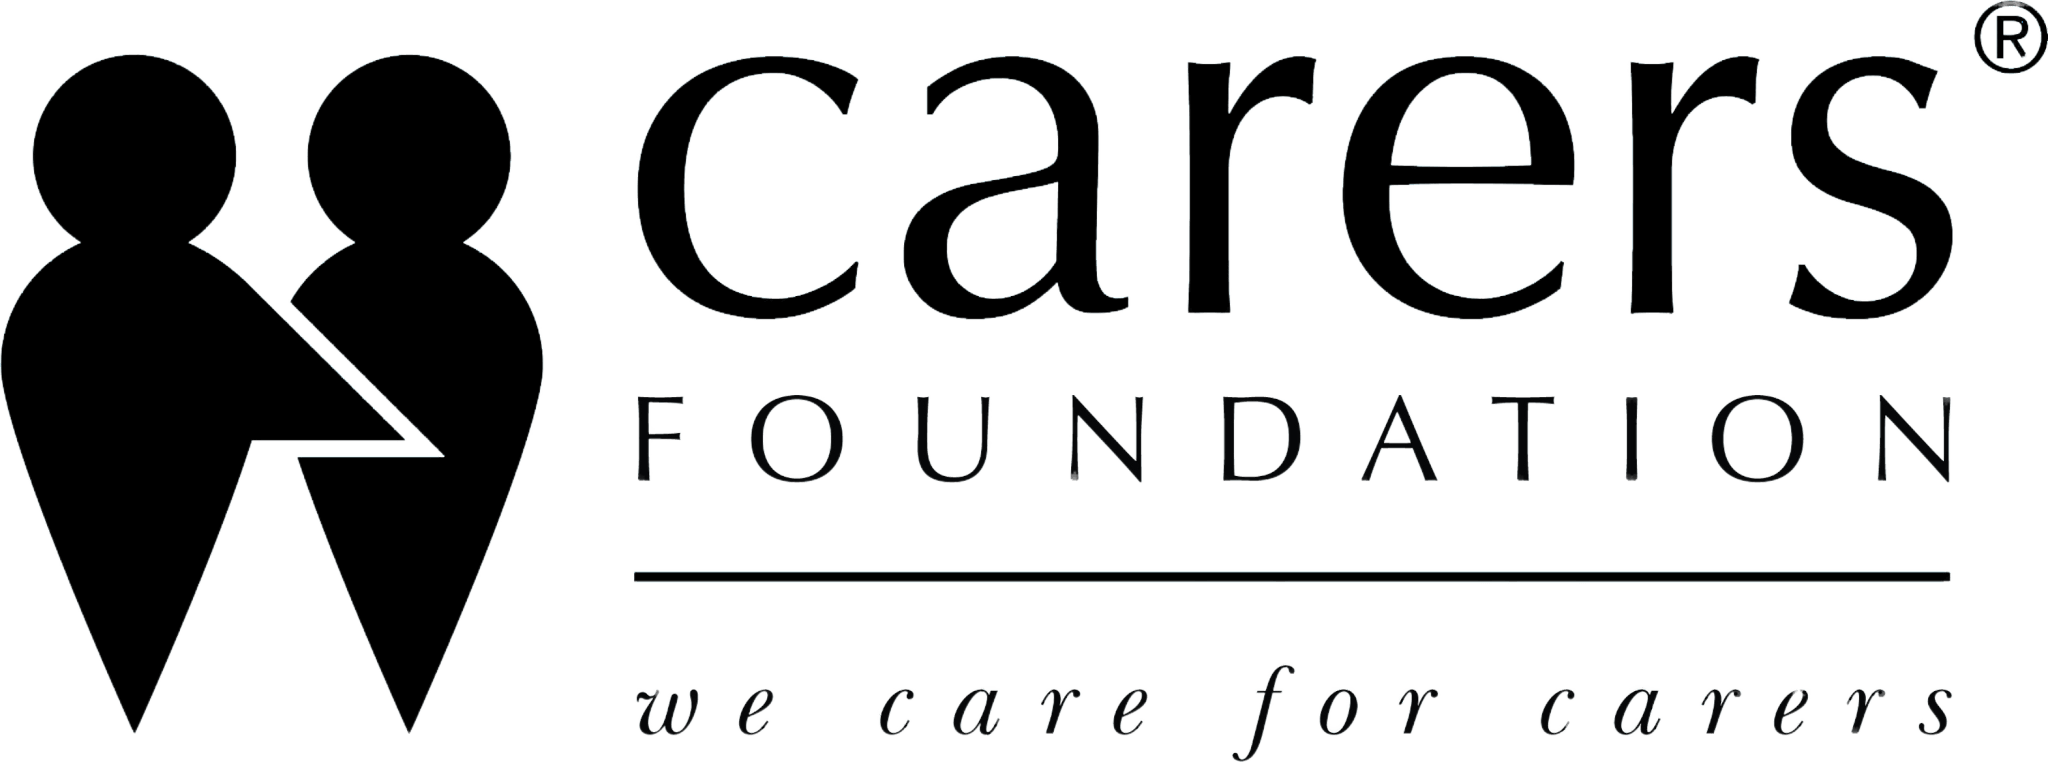 Carers Foundation